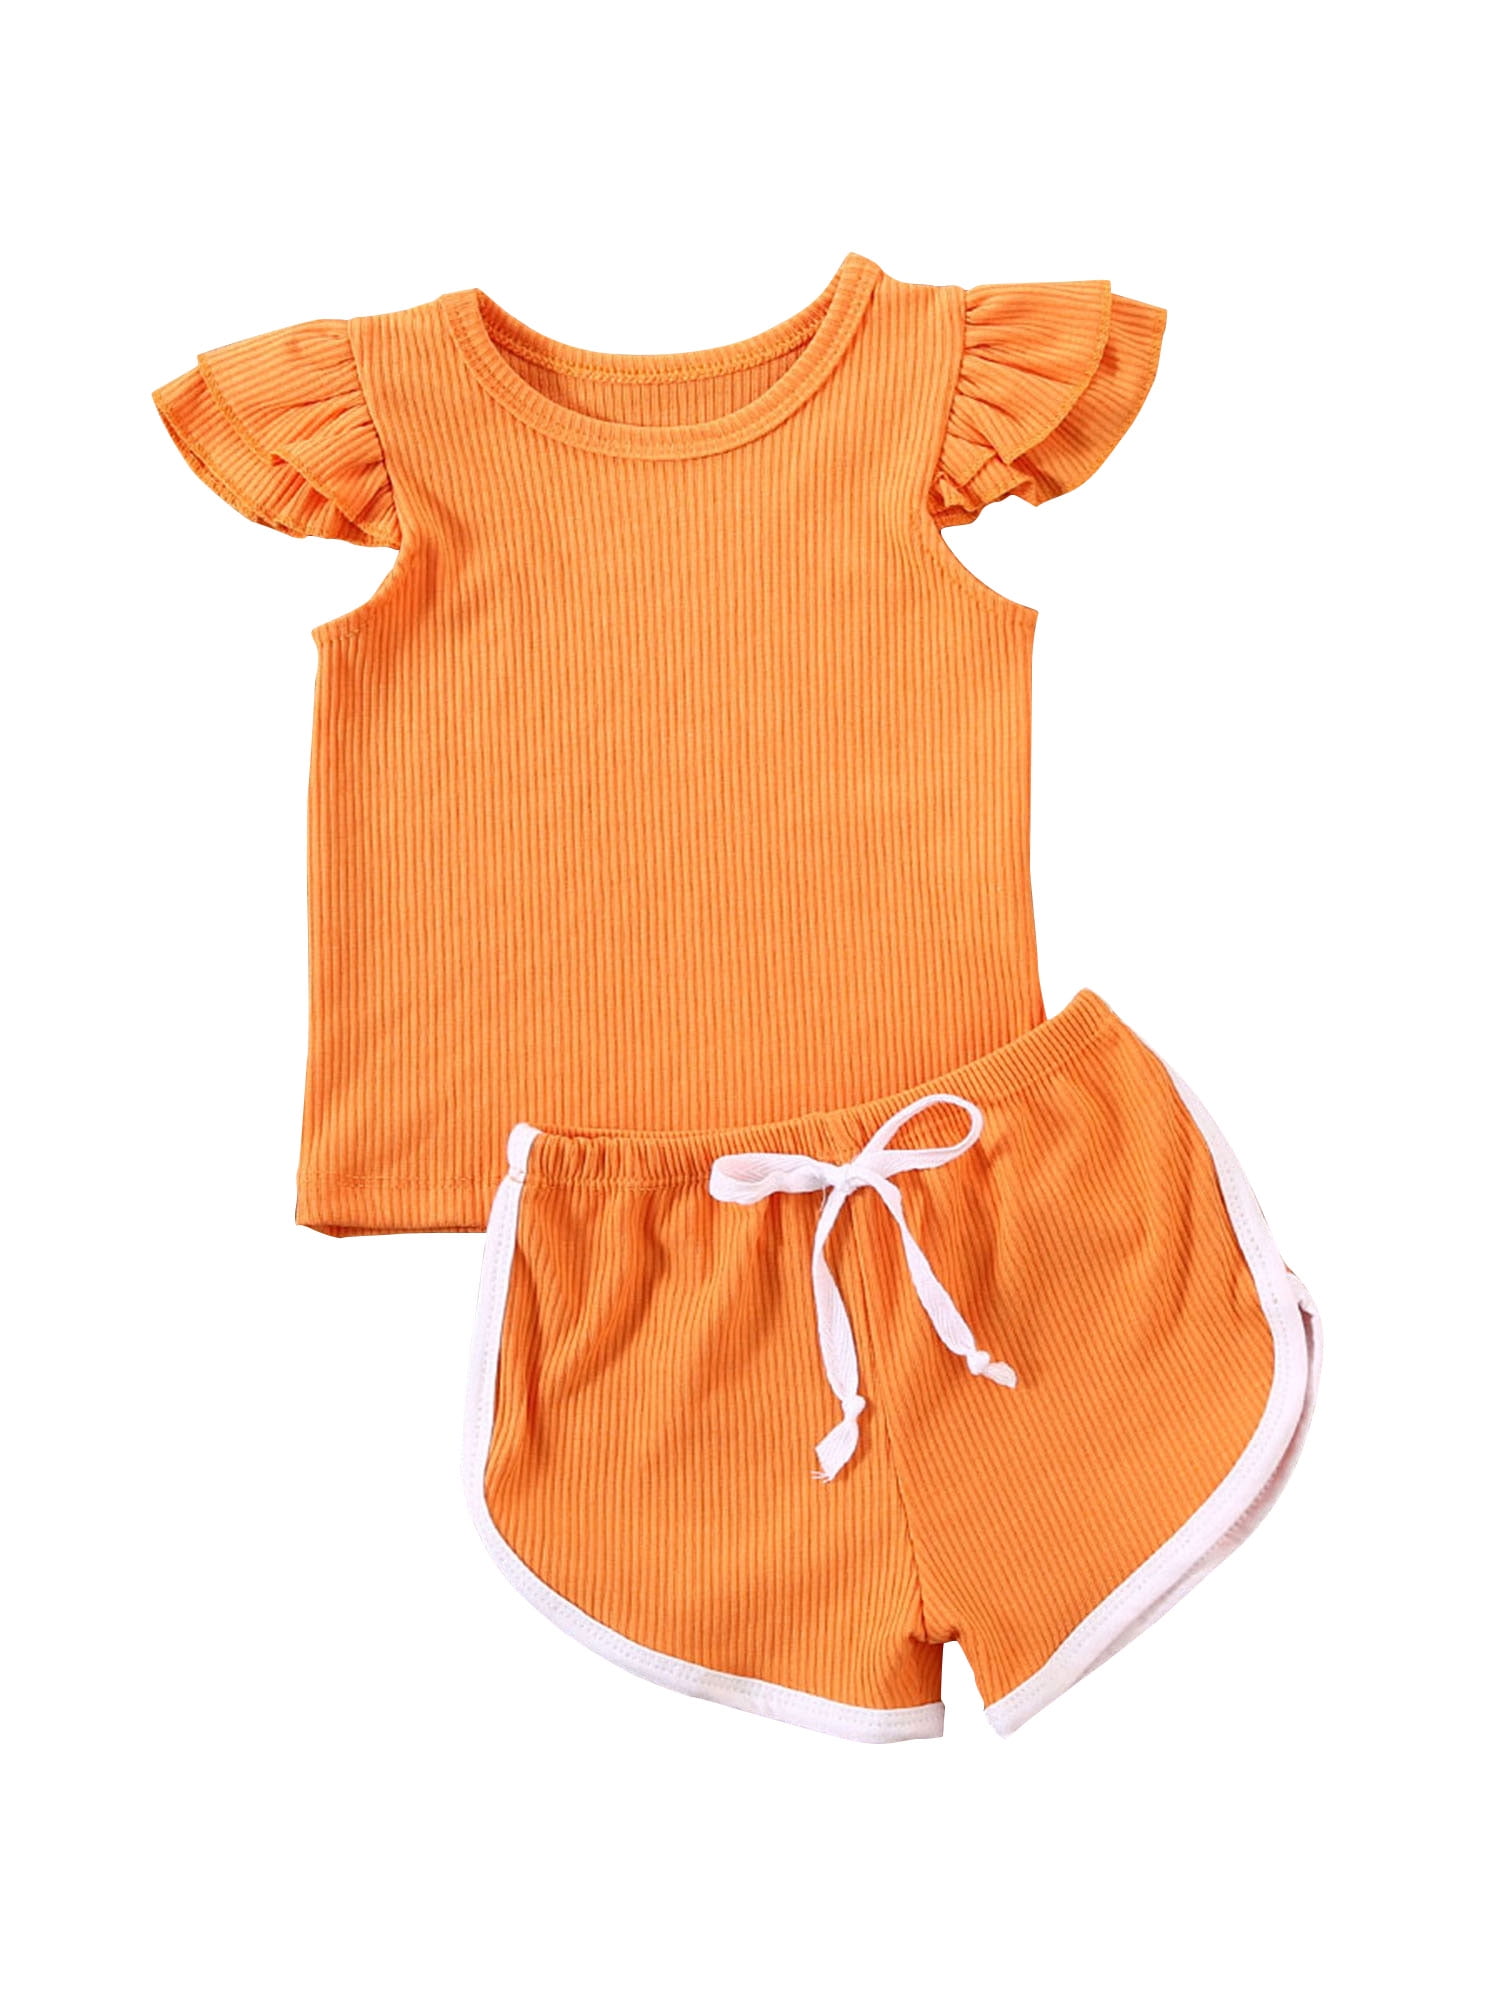 Toddler Kids Baby Girls T-shirt Tops+Pants/Shorts/Dress Outfits Clothes 2PCS Set 